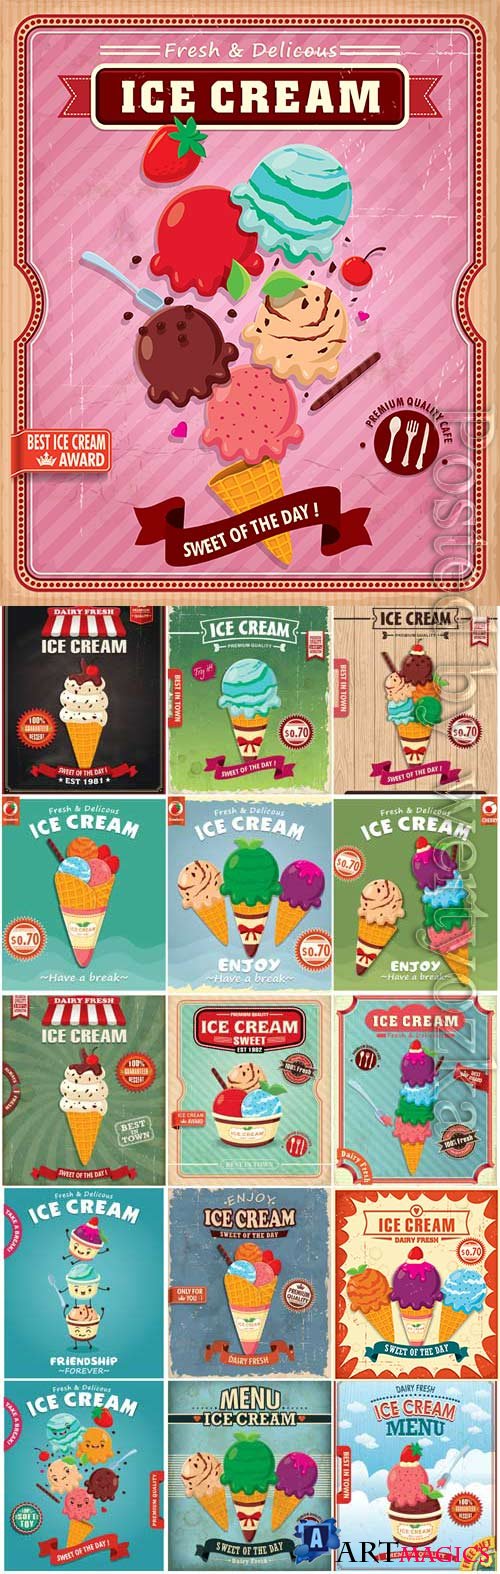 Ice cream advertising retro posters in vector